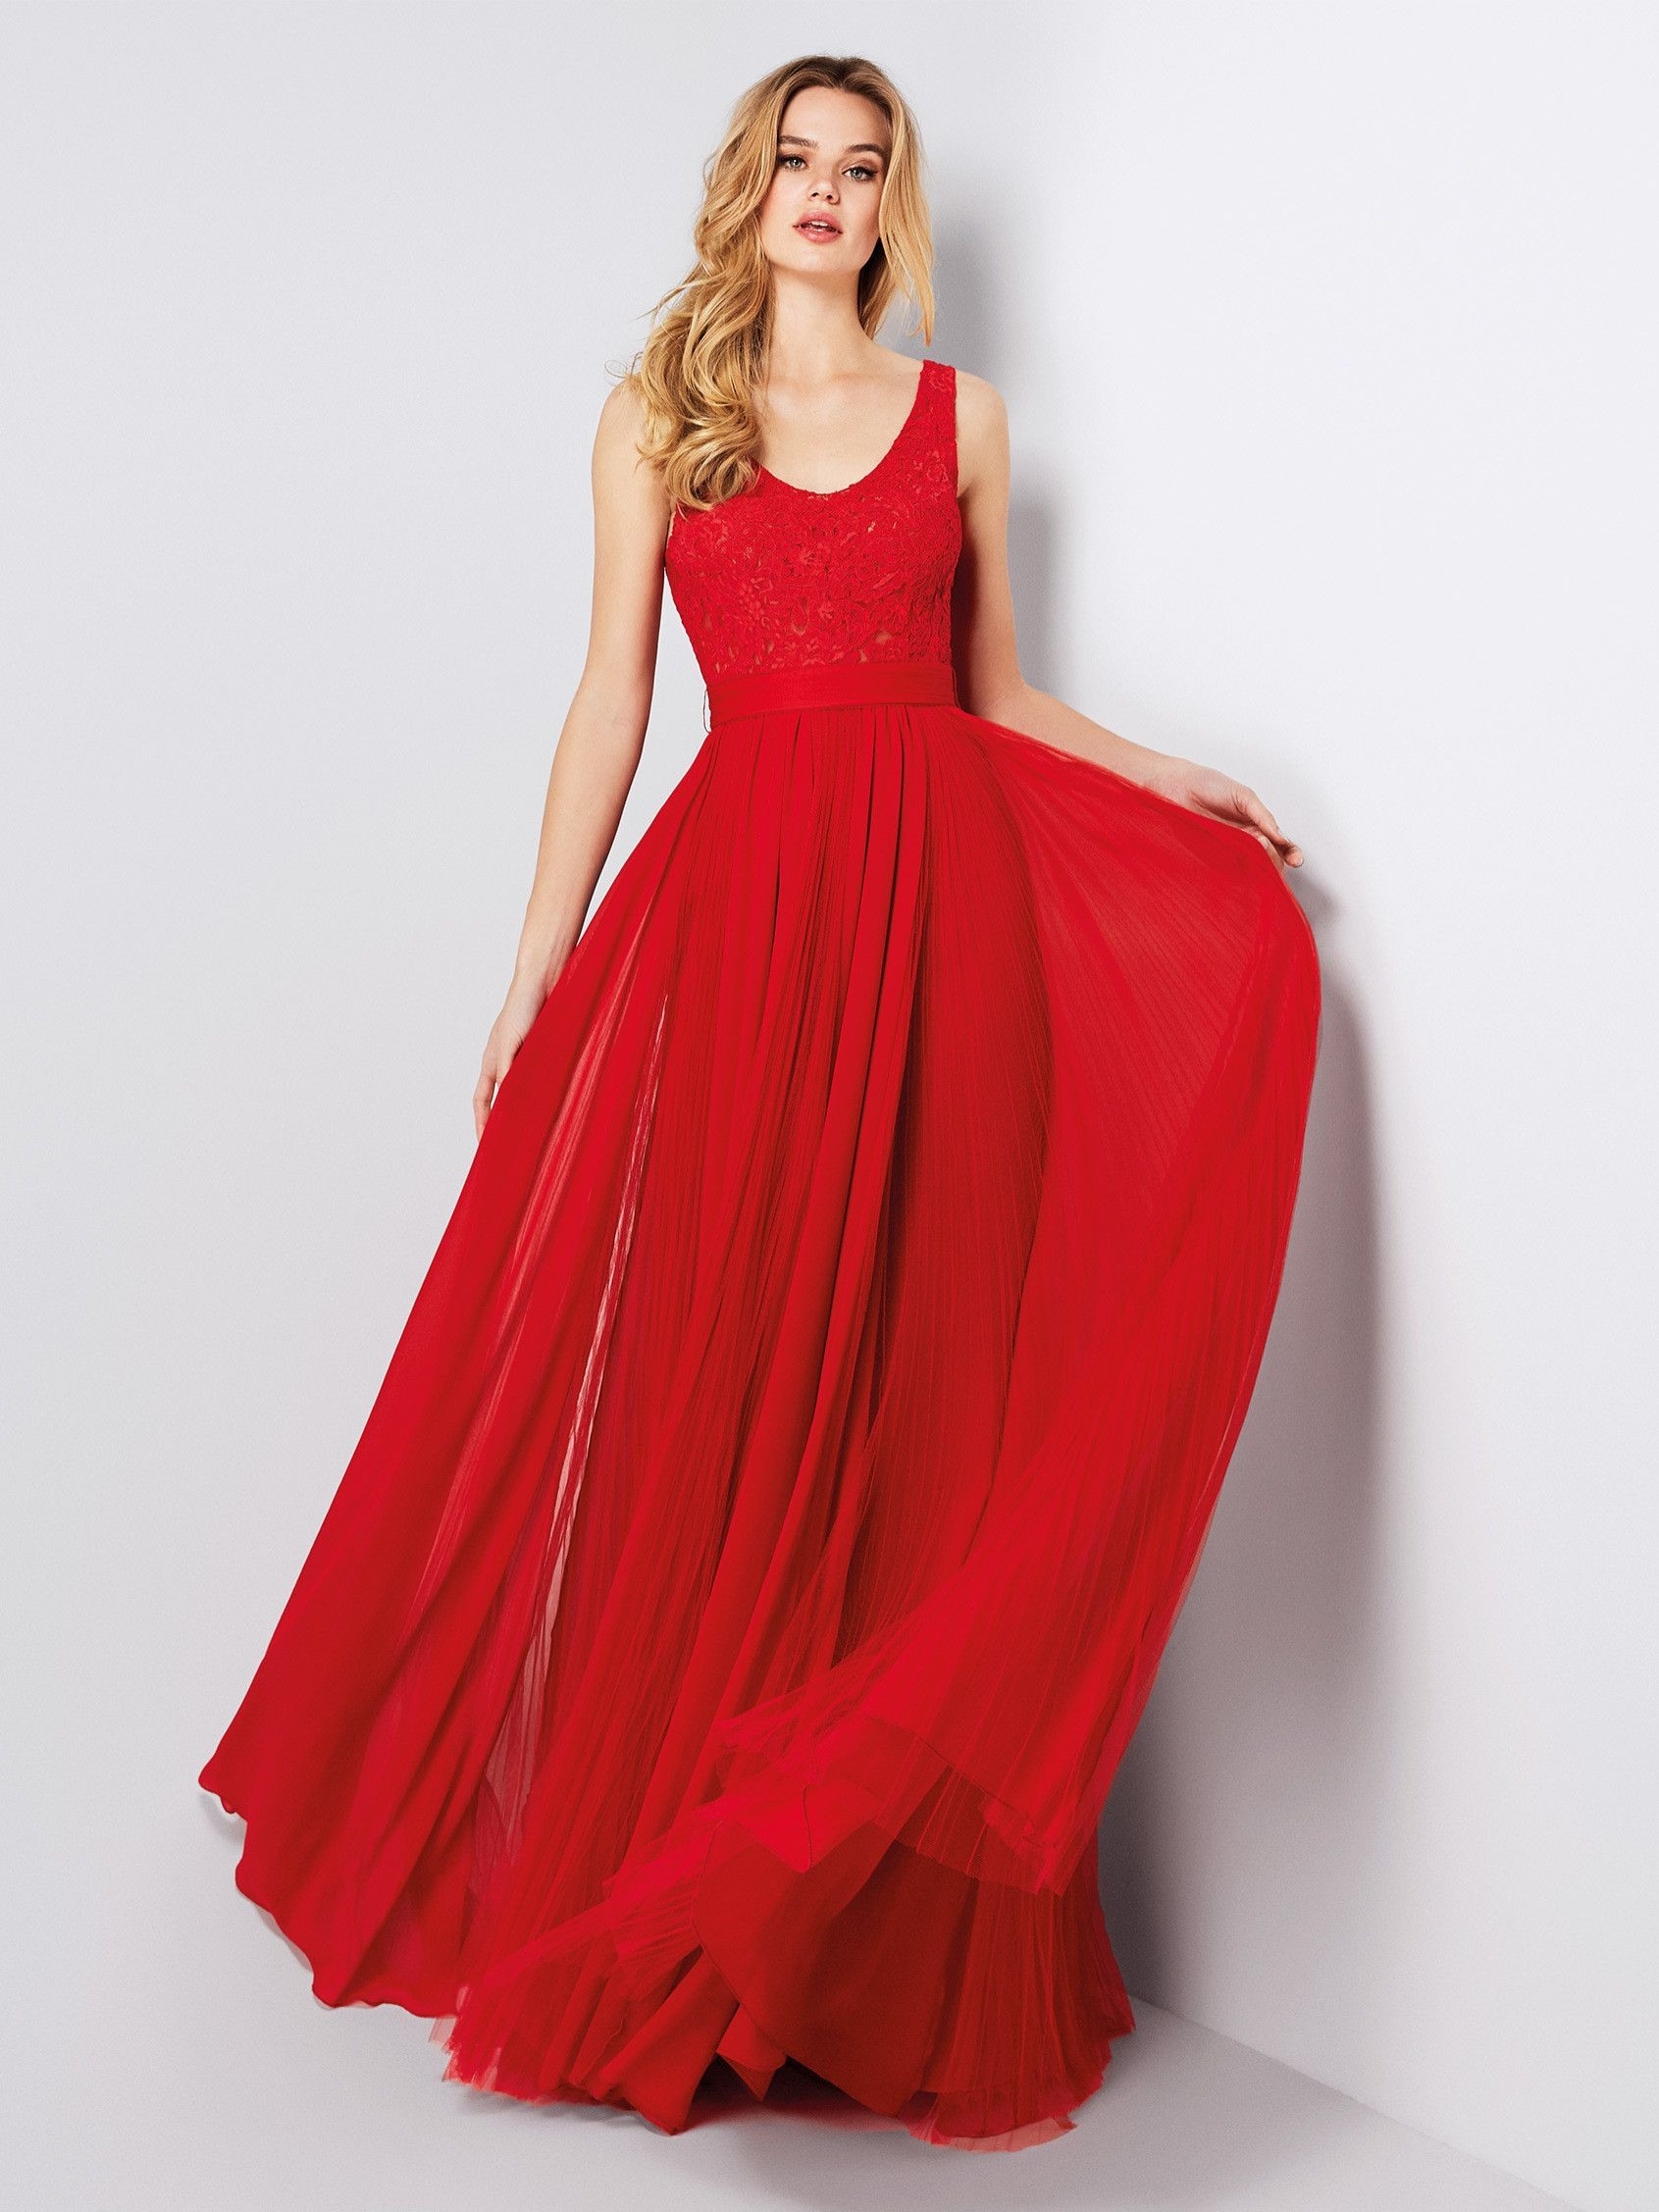 20 Einfach Abendkleid Rot Ärmel20 Großartig Abendkleid Rot Bester Preis